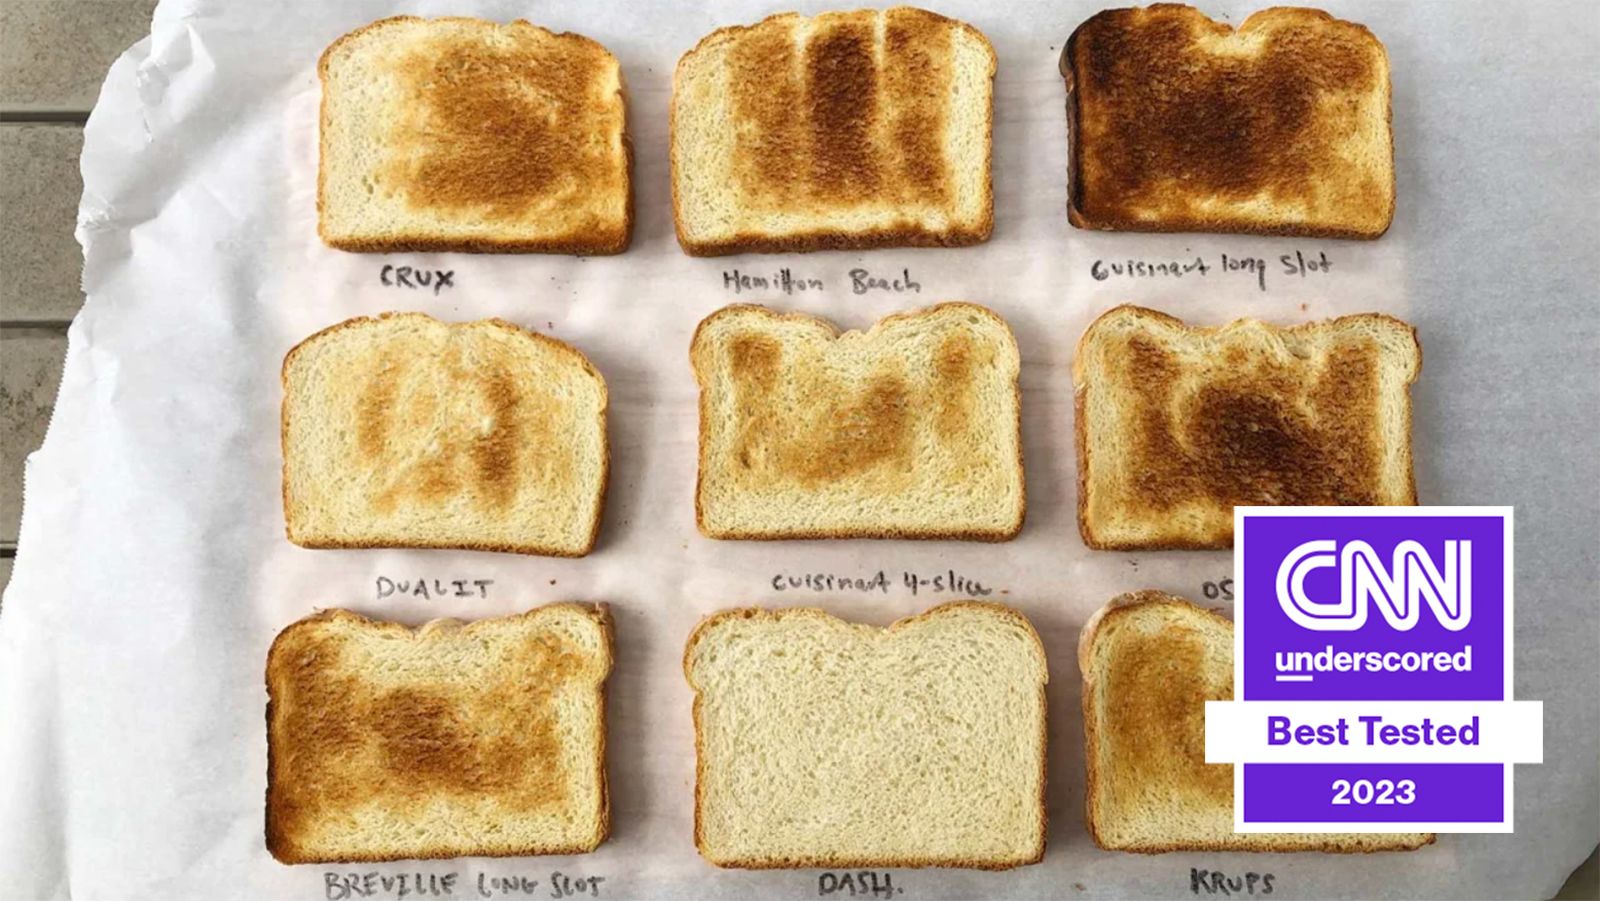 https://media.cnn.com/api/v1/images/stellar/prod/best-toaster-badged-lead-23.jpg?c=original